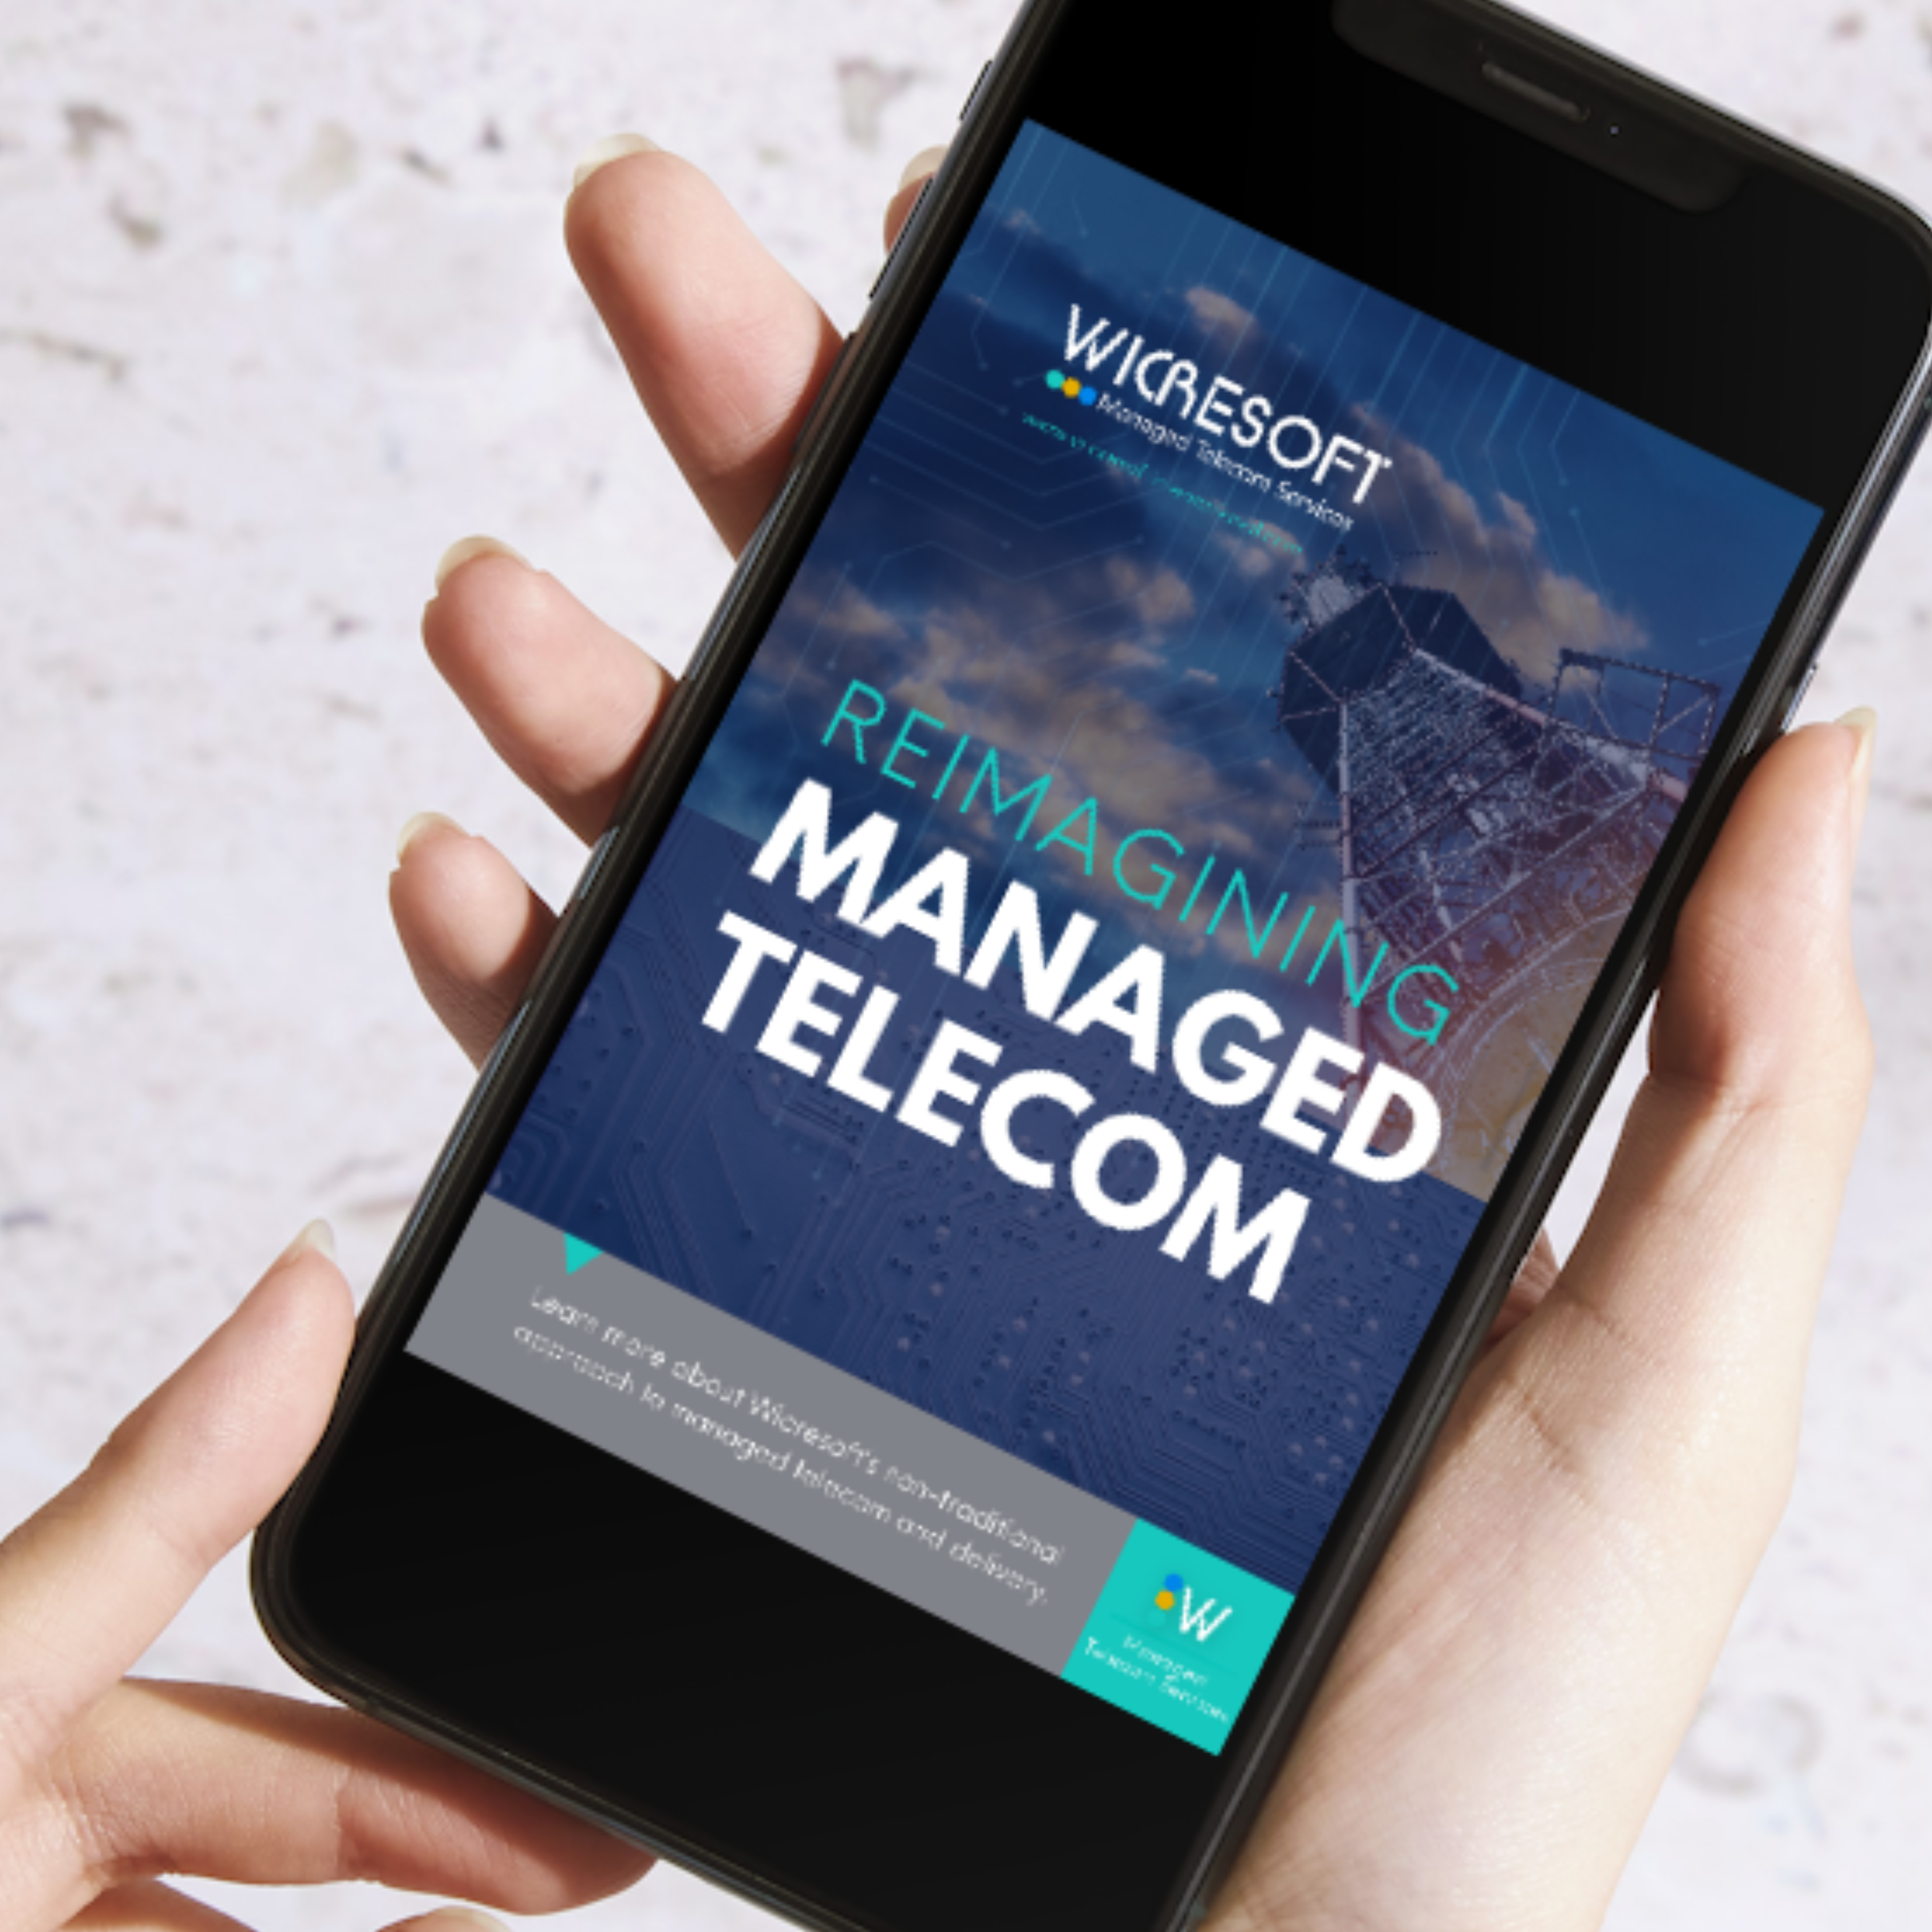 Reimagining managed telecom Ebook